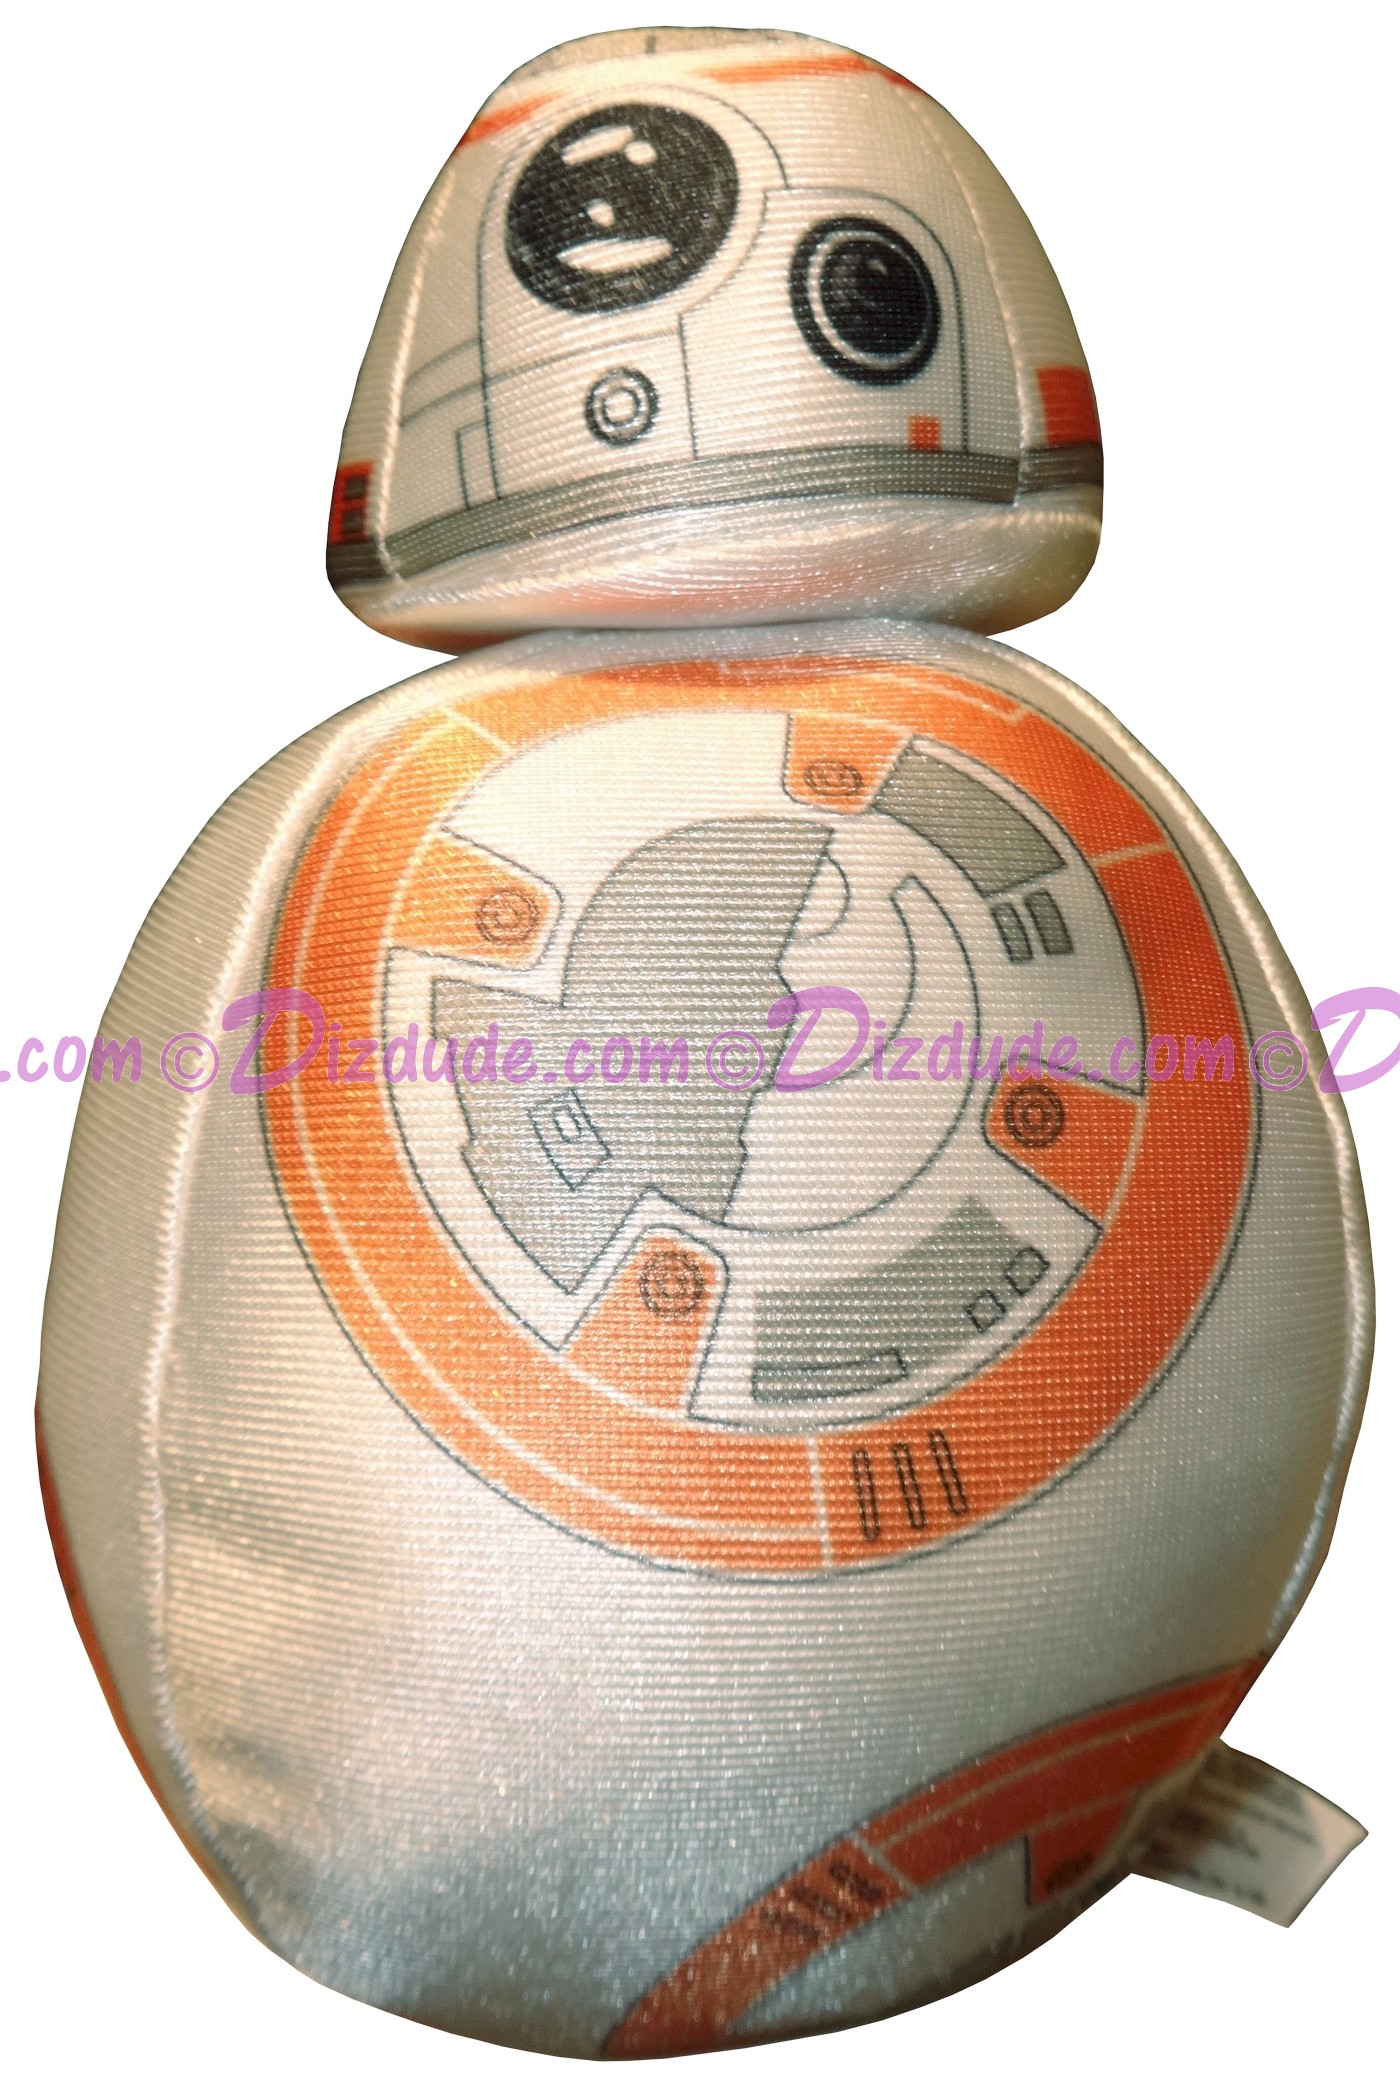 Disney Star Wars: The Force Awakens BB-8 7 inch Plush © Dizdude.com